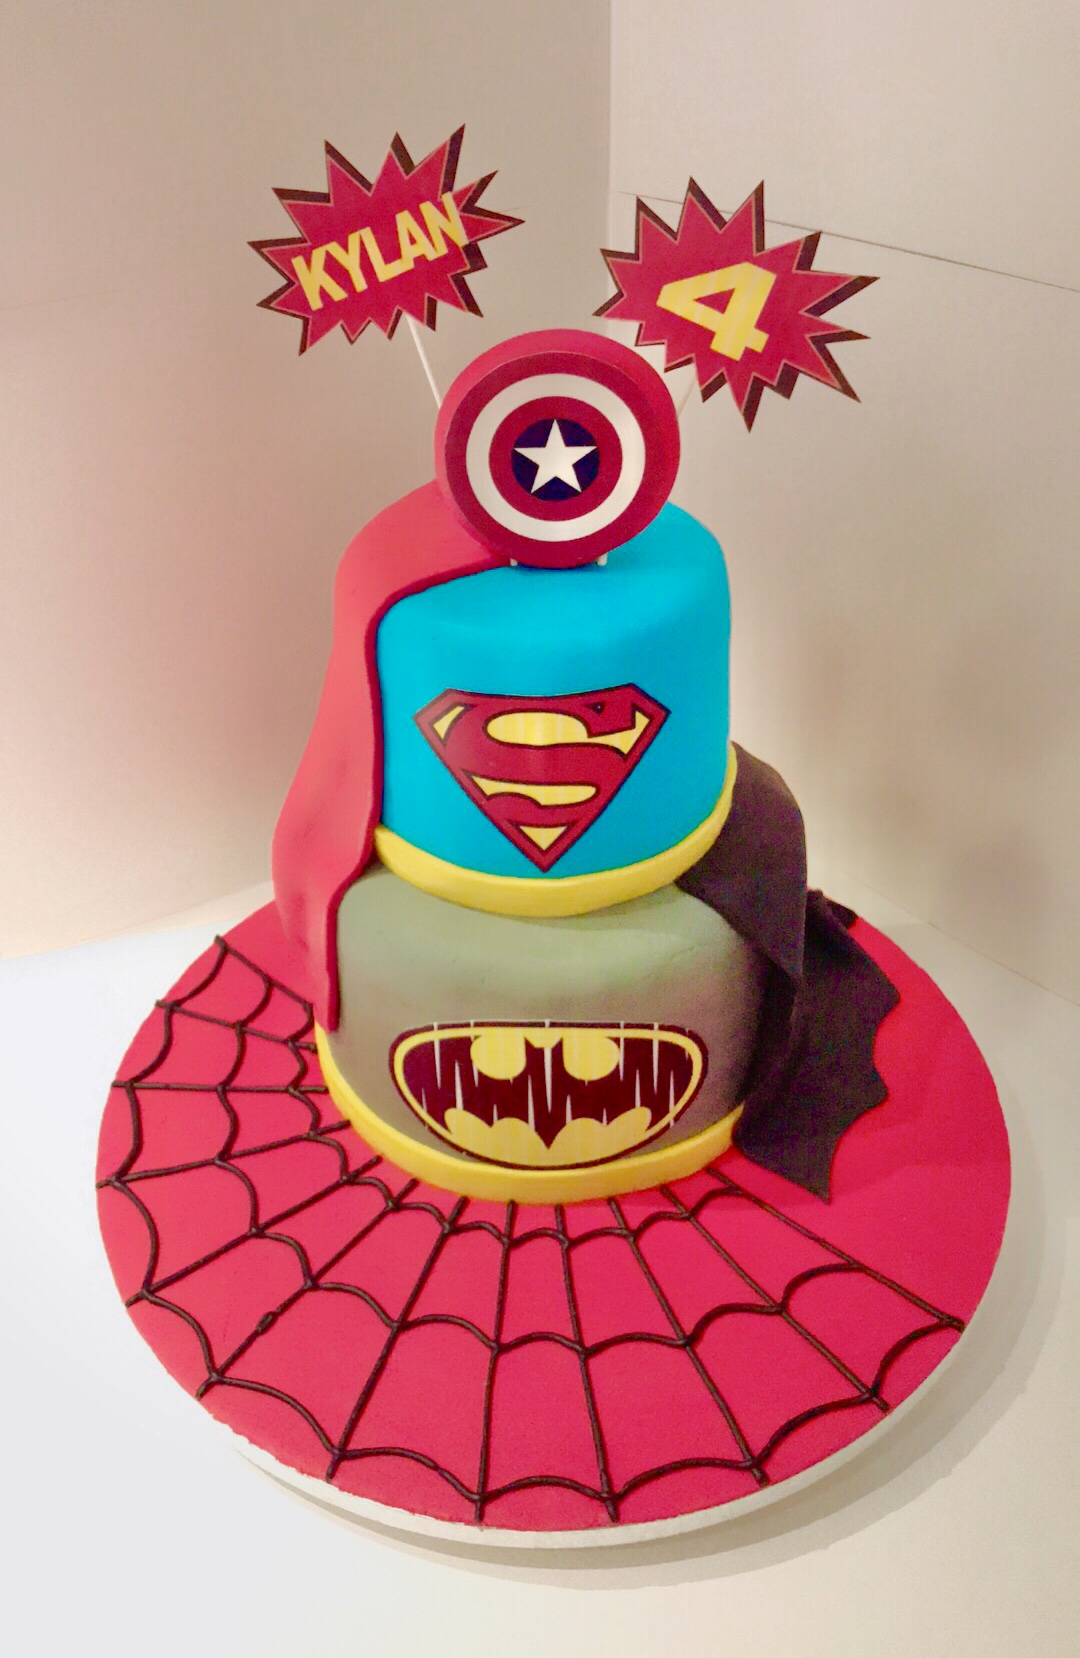 Superhero cake decorations, Superhero birthday cake decorations, Superhero  birthday cake decorations, ren's birthday party cake decorations | Walmart  Canada